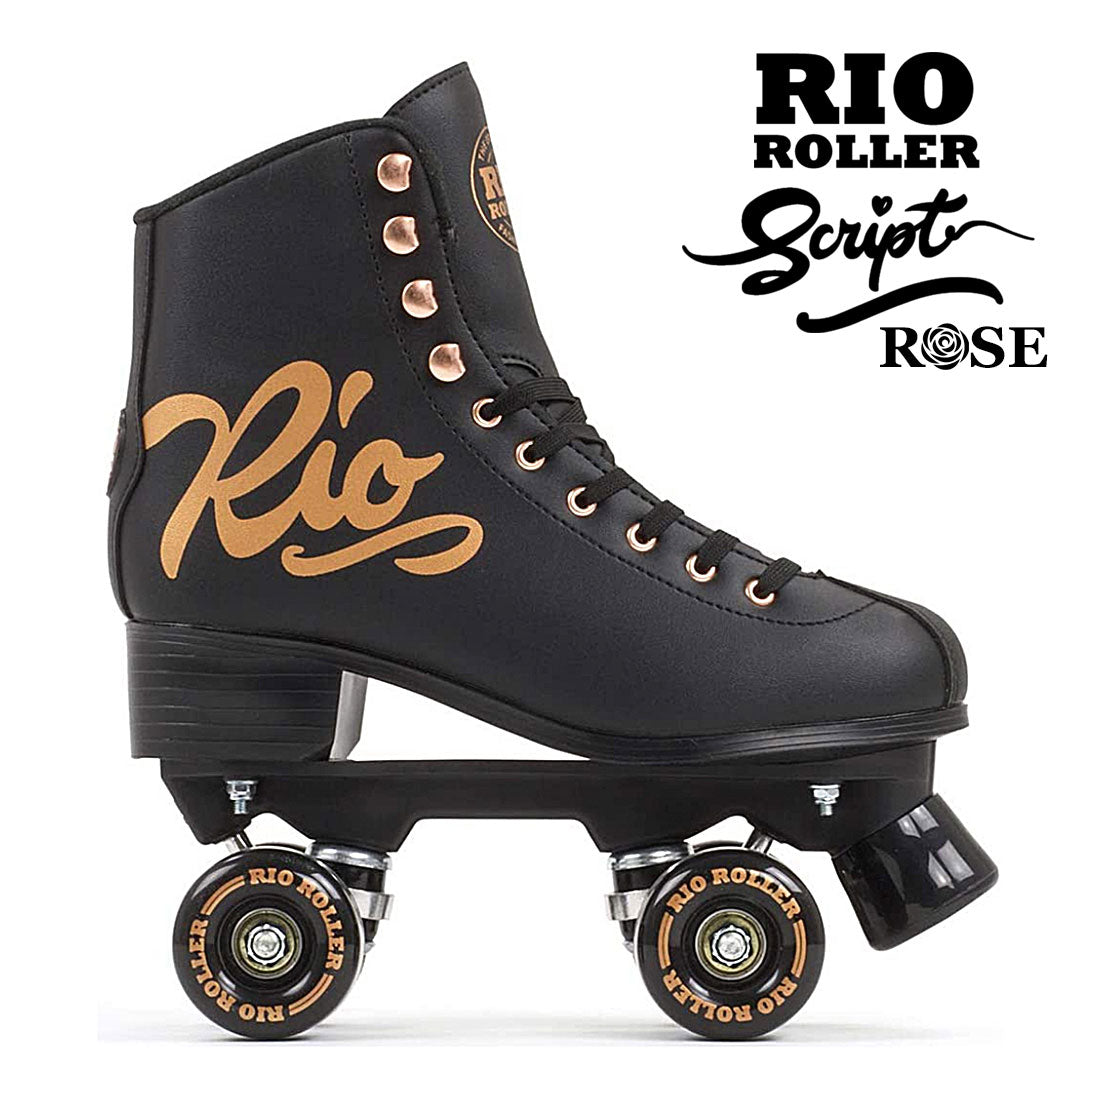 Rio Roller Script Rose - Black Roller Skates